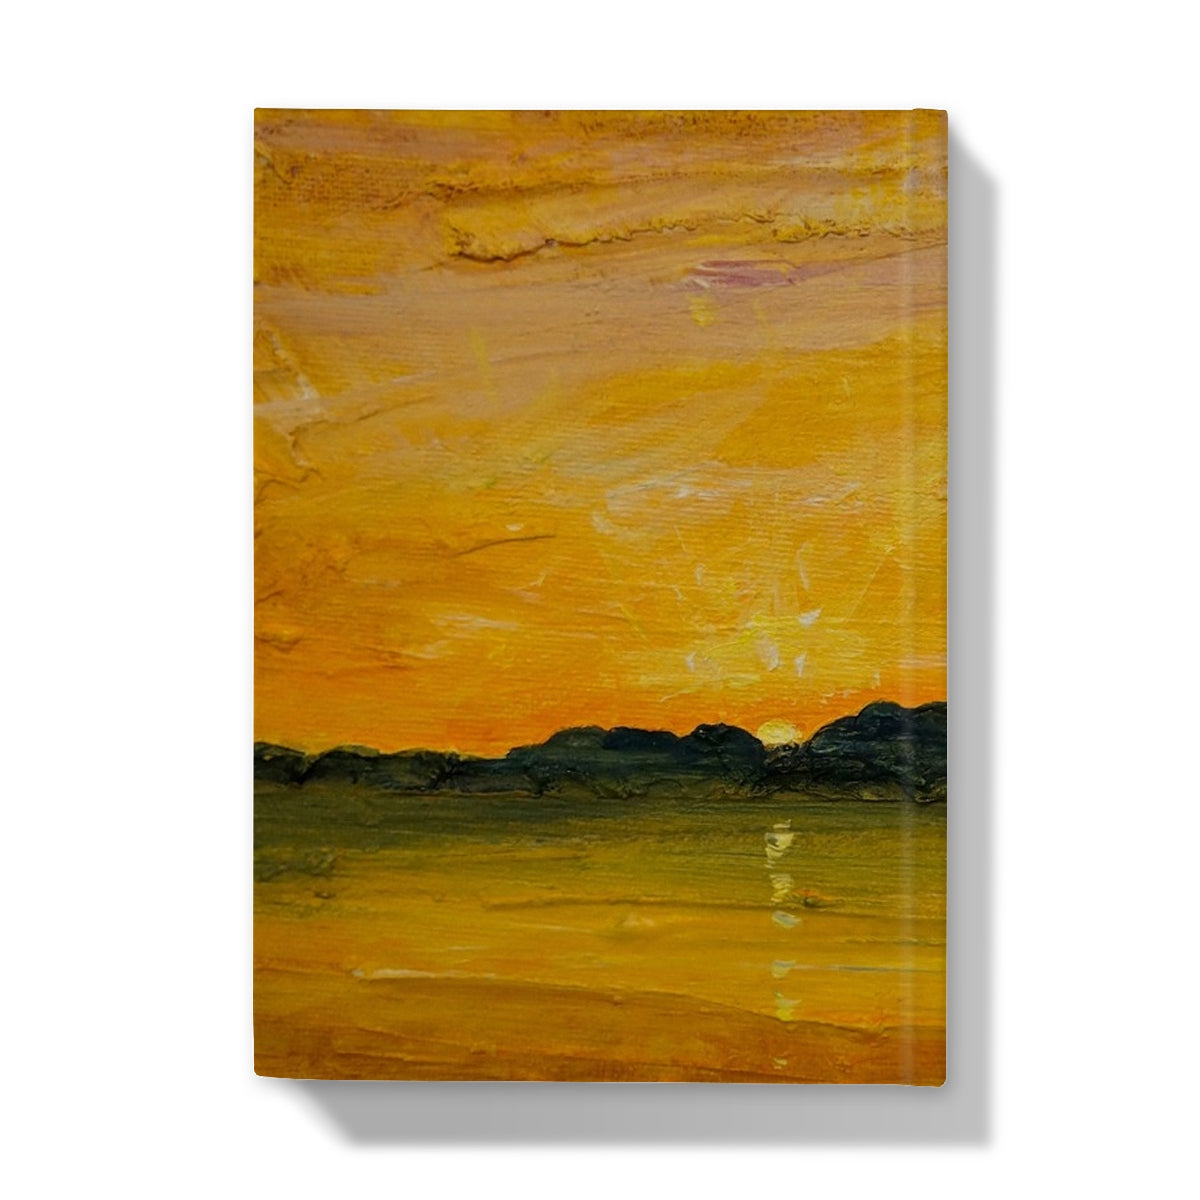 Jura Sunset Art Gifts Hardback Journal-Journals & Notebooks-Hebridean Islands Art Gallery-Paintings, Prints, Homeware, Art Gifts From Scotland By Scottish Artist Kevin Hunter